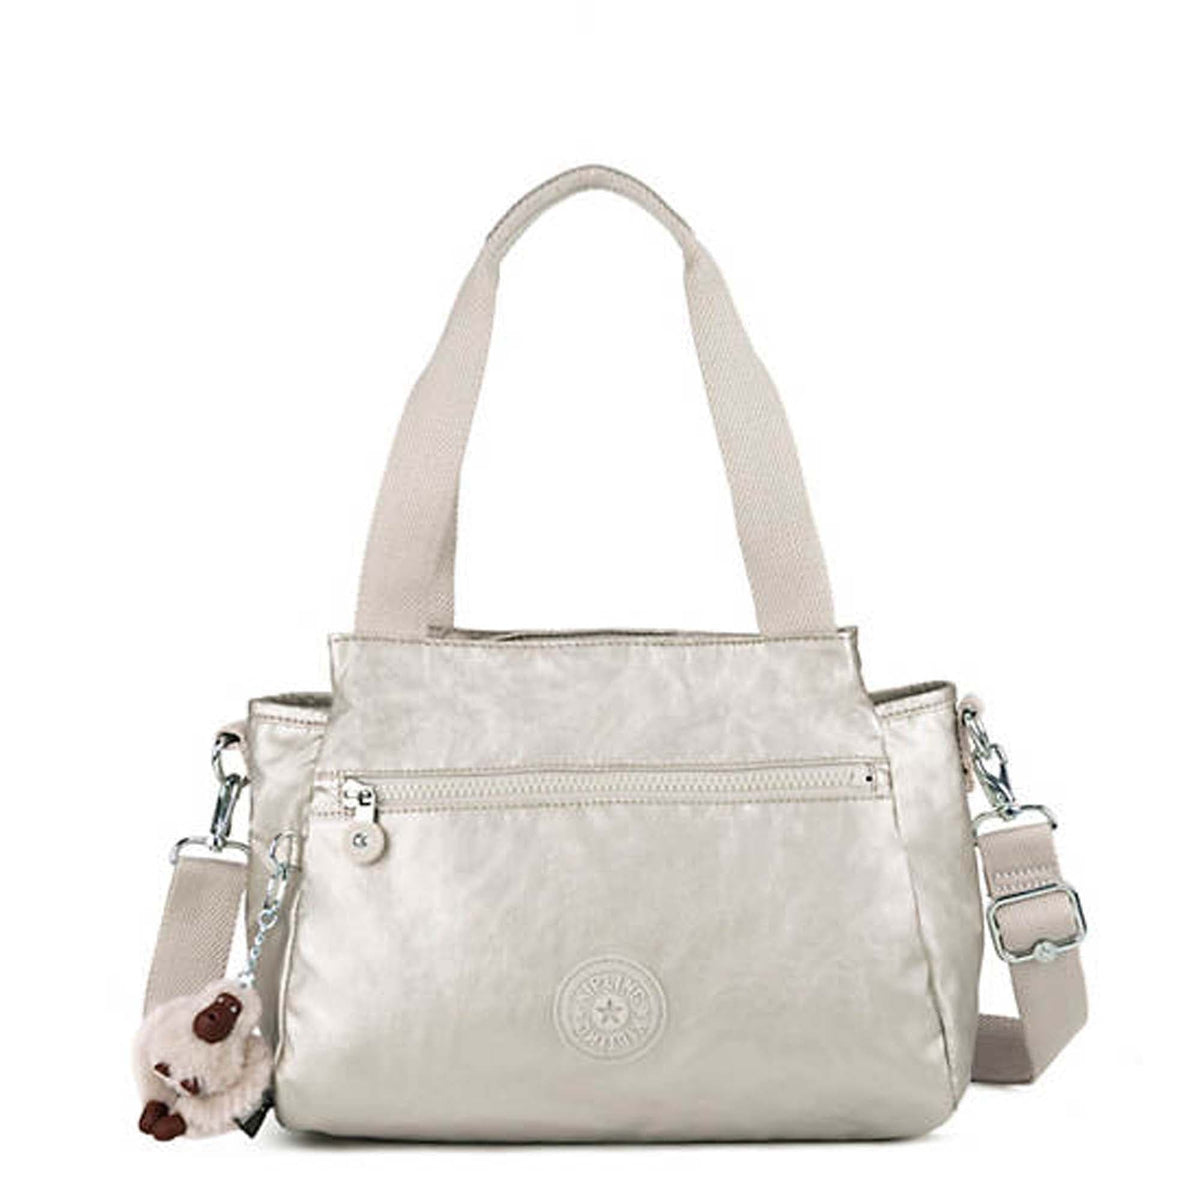 Kipling Elysia Metallic Handbag Hb6940